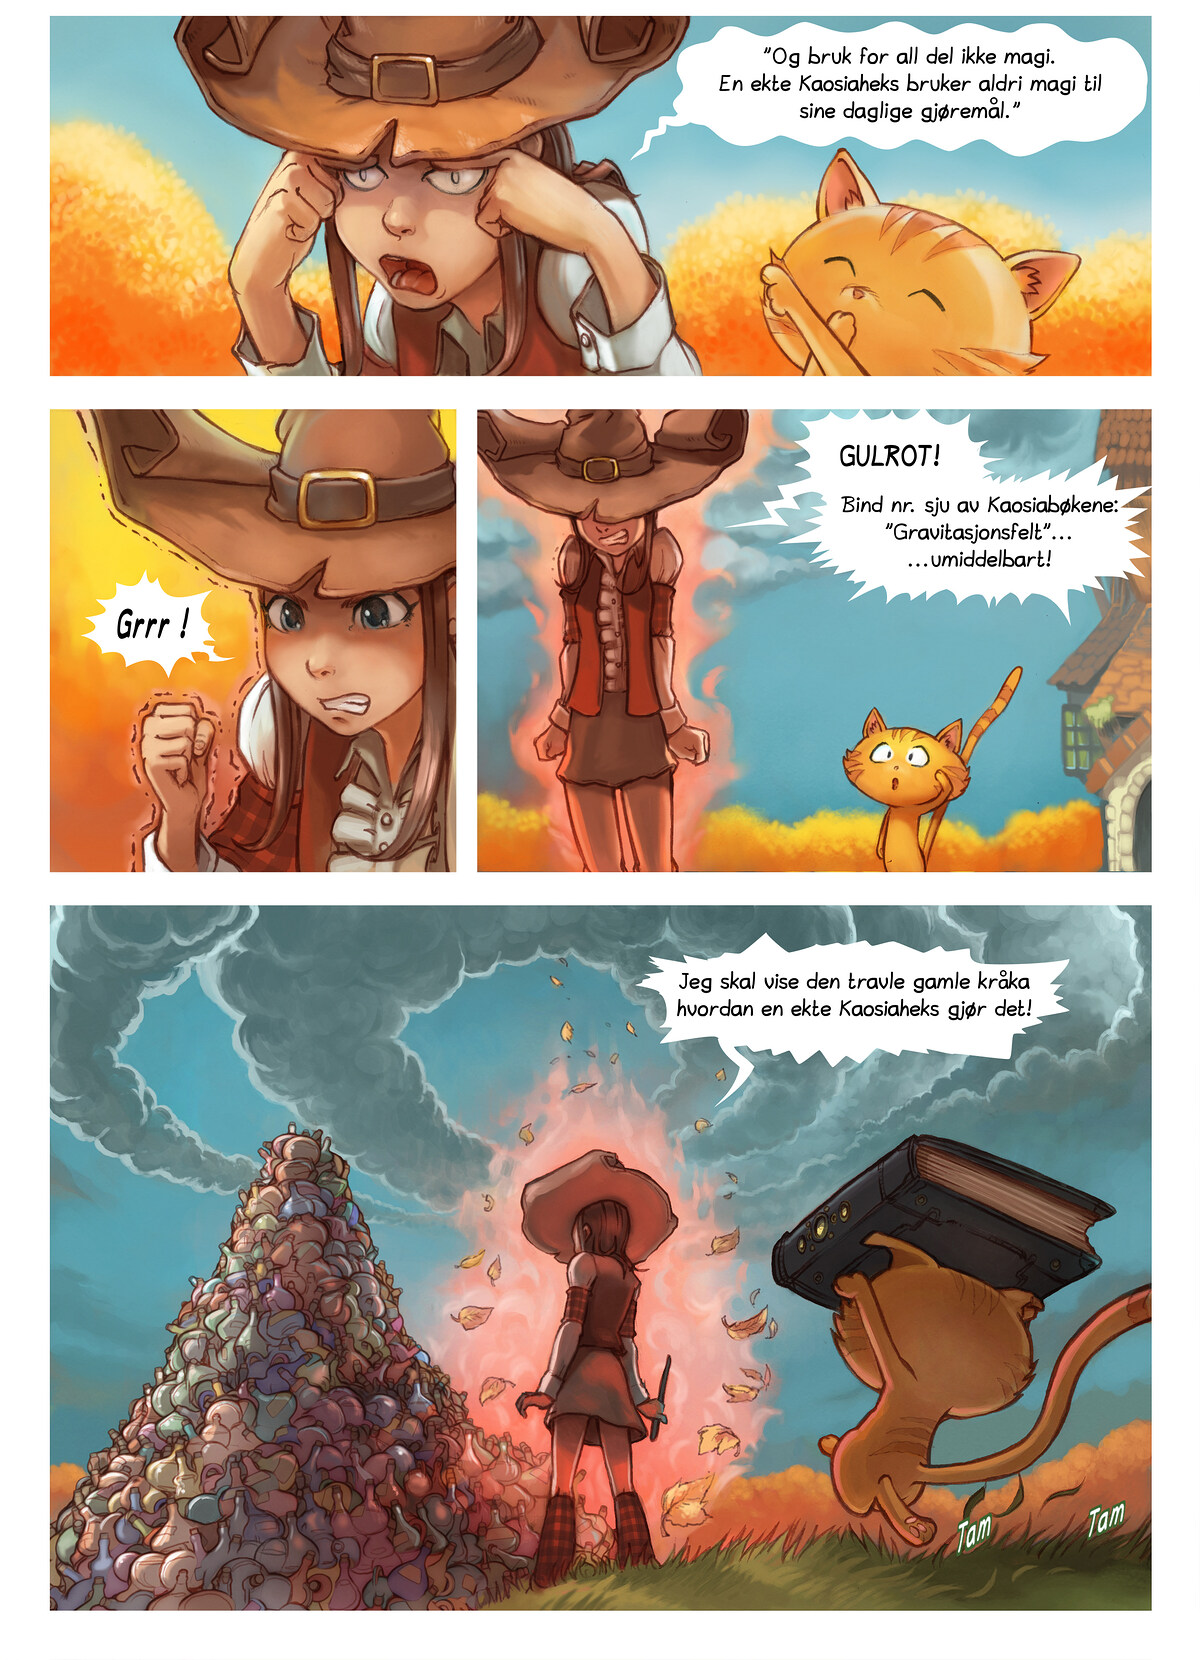 Episode 12: Høstrengjøring, Page 3